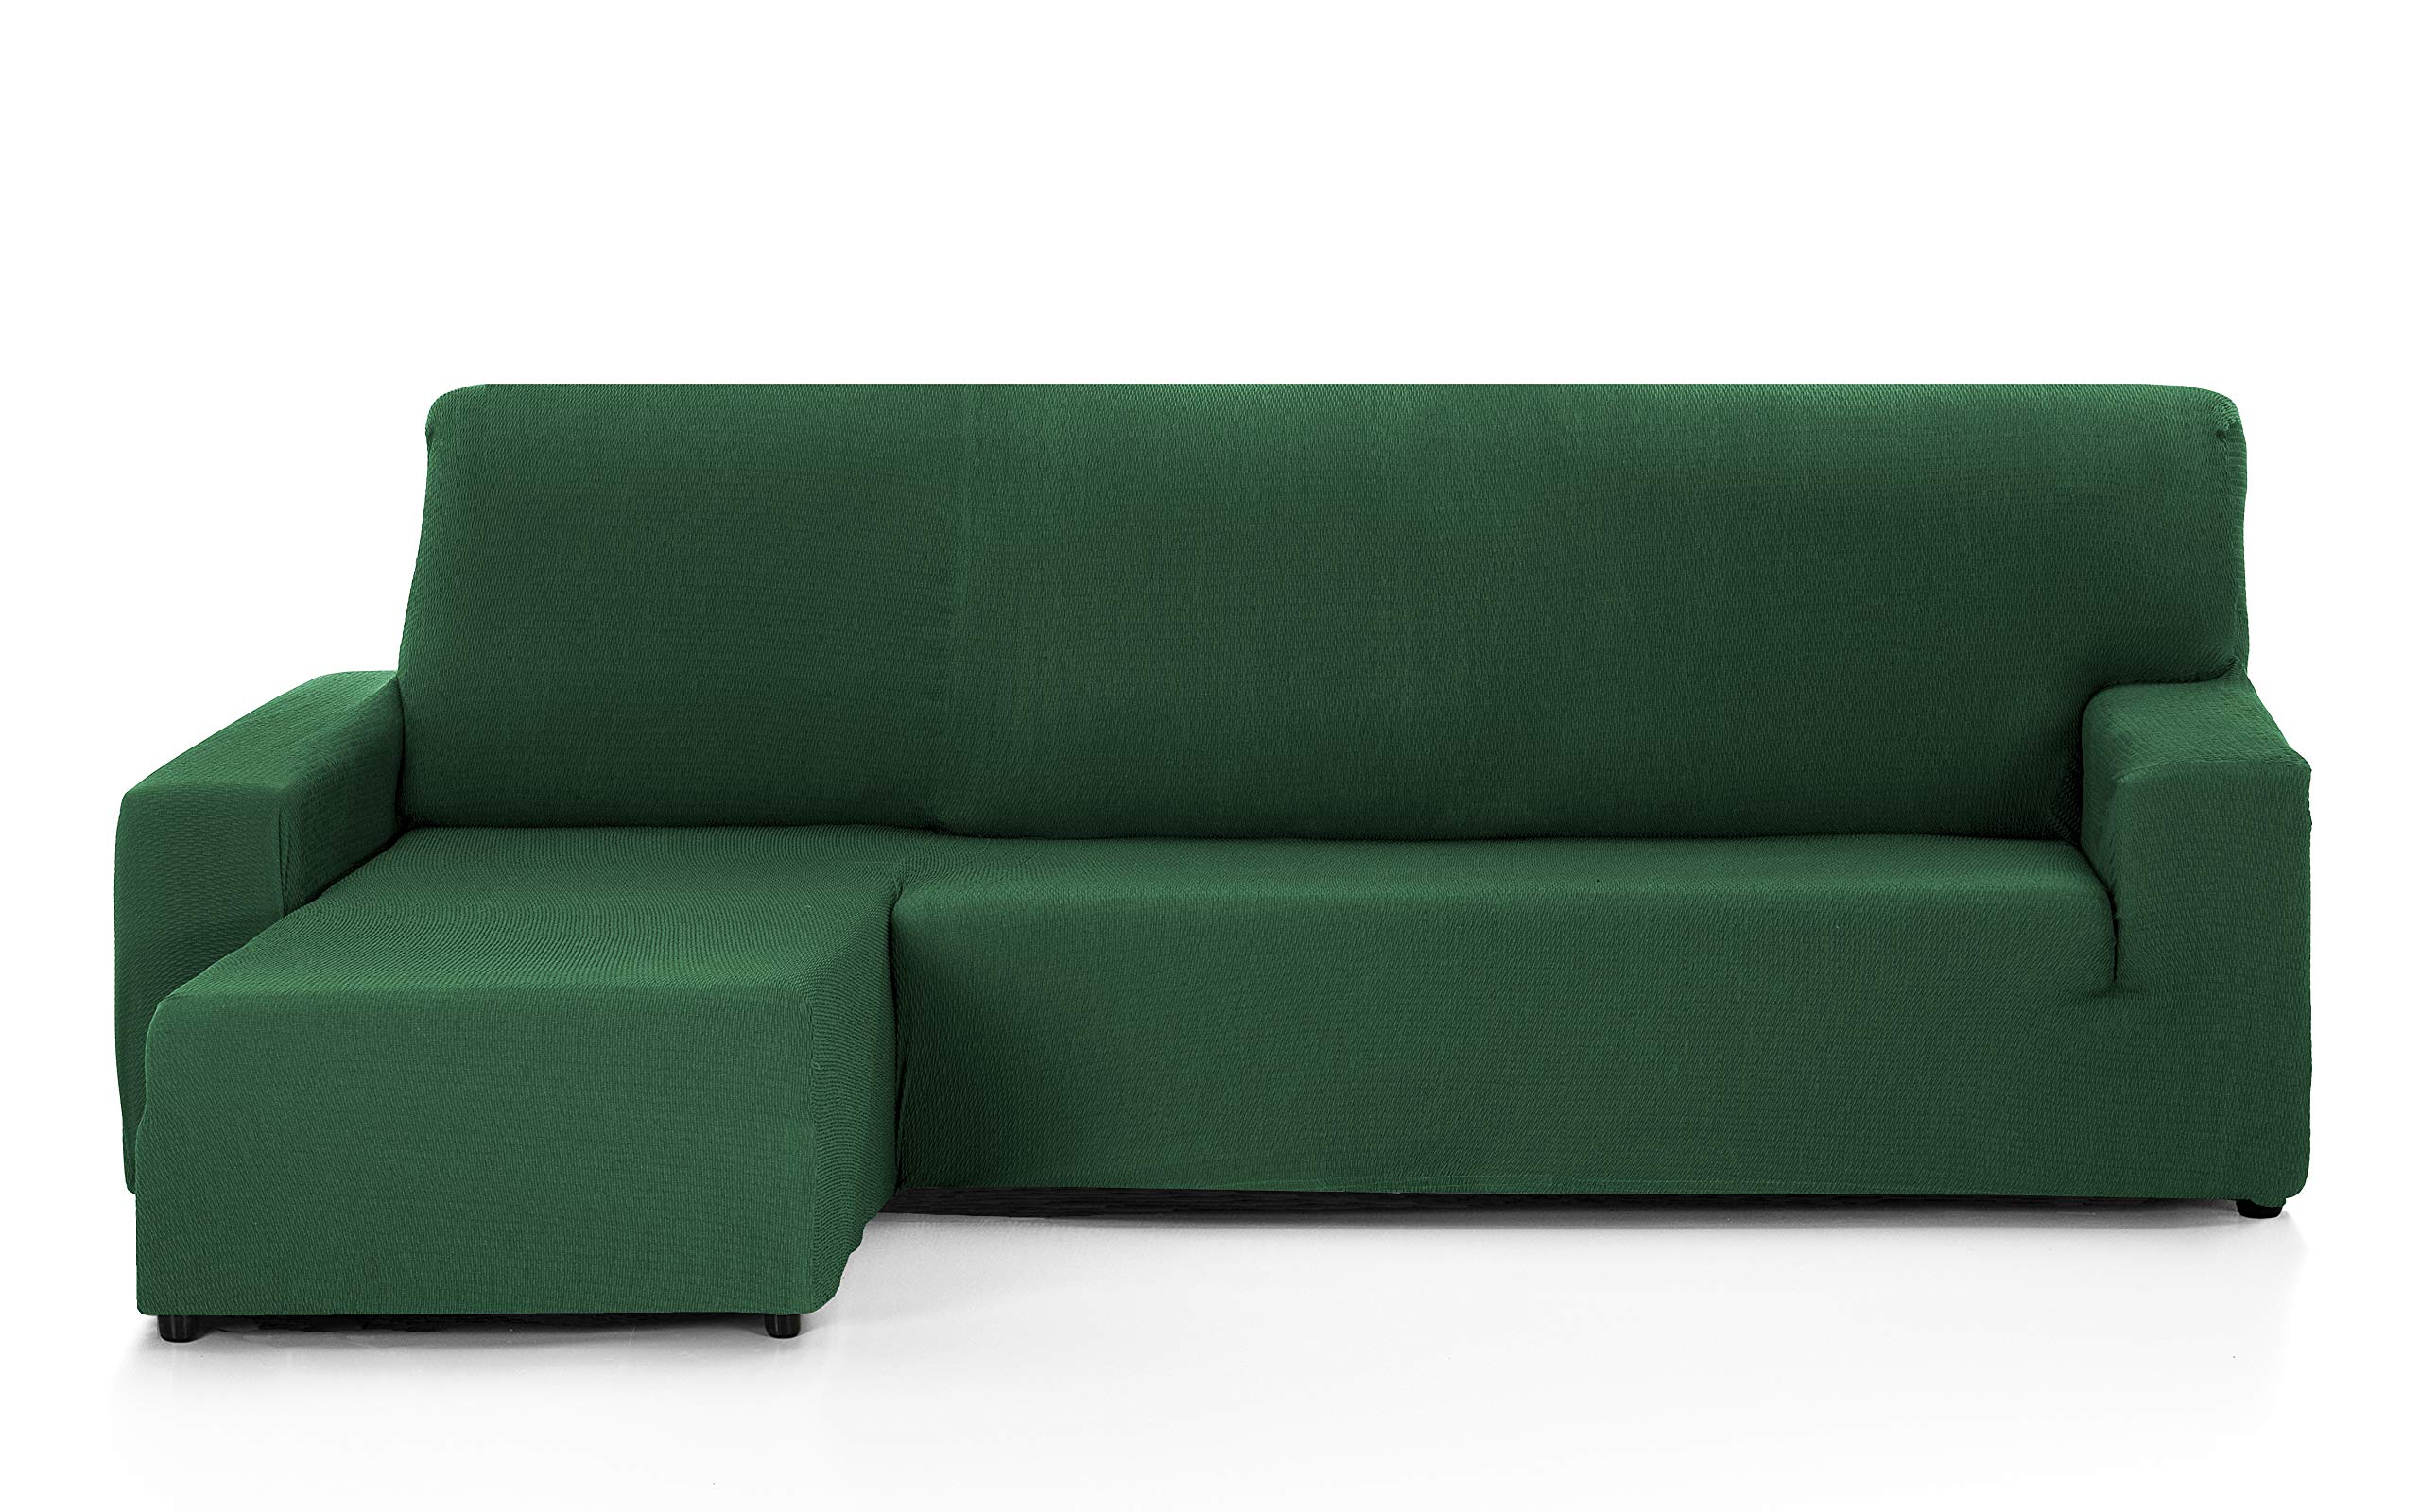 Martina Home - Sofabezug für Chaiselongue, Modell Túnez, modernes Design, Stoff, Flaschengrün, kurzes Eckteil Links